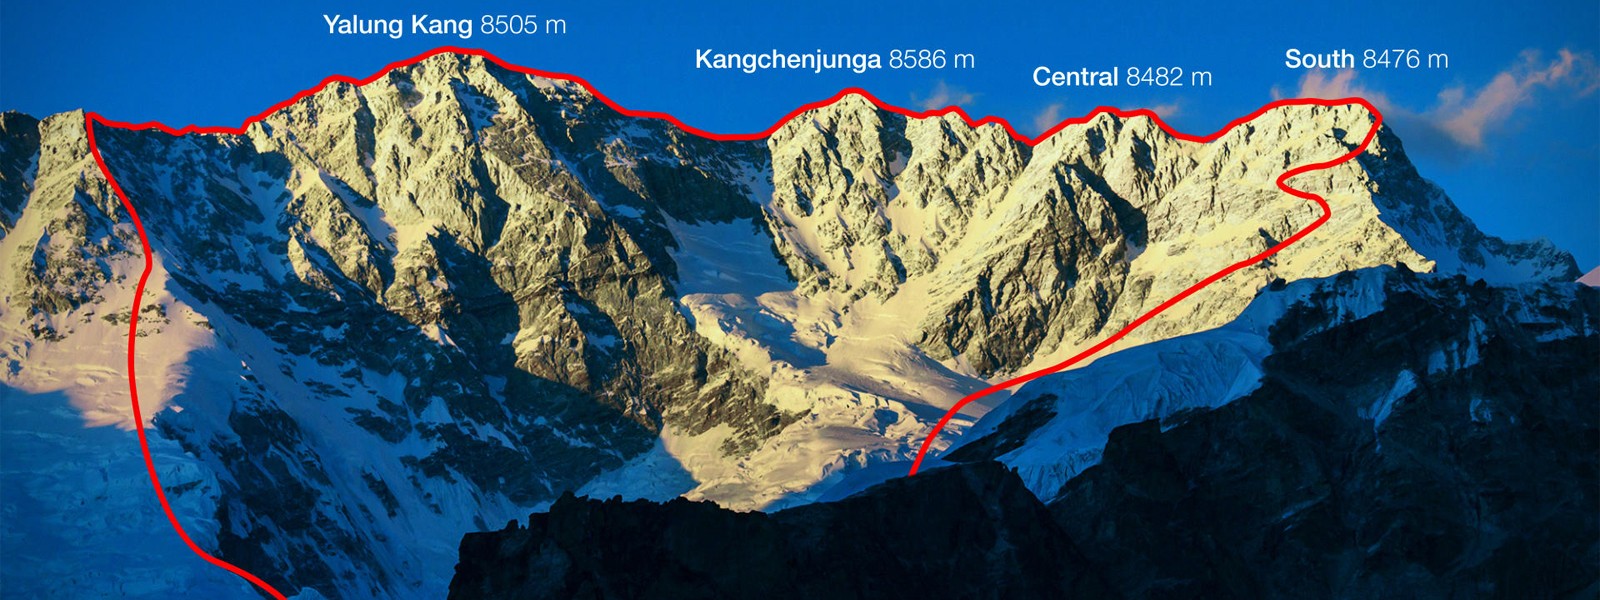 Mount Kanchenjunga Climbing